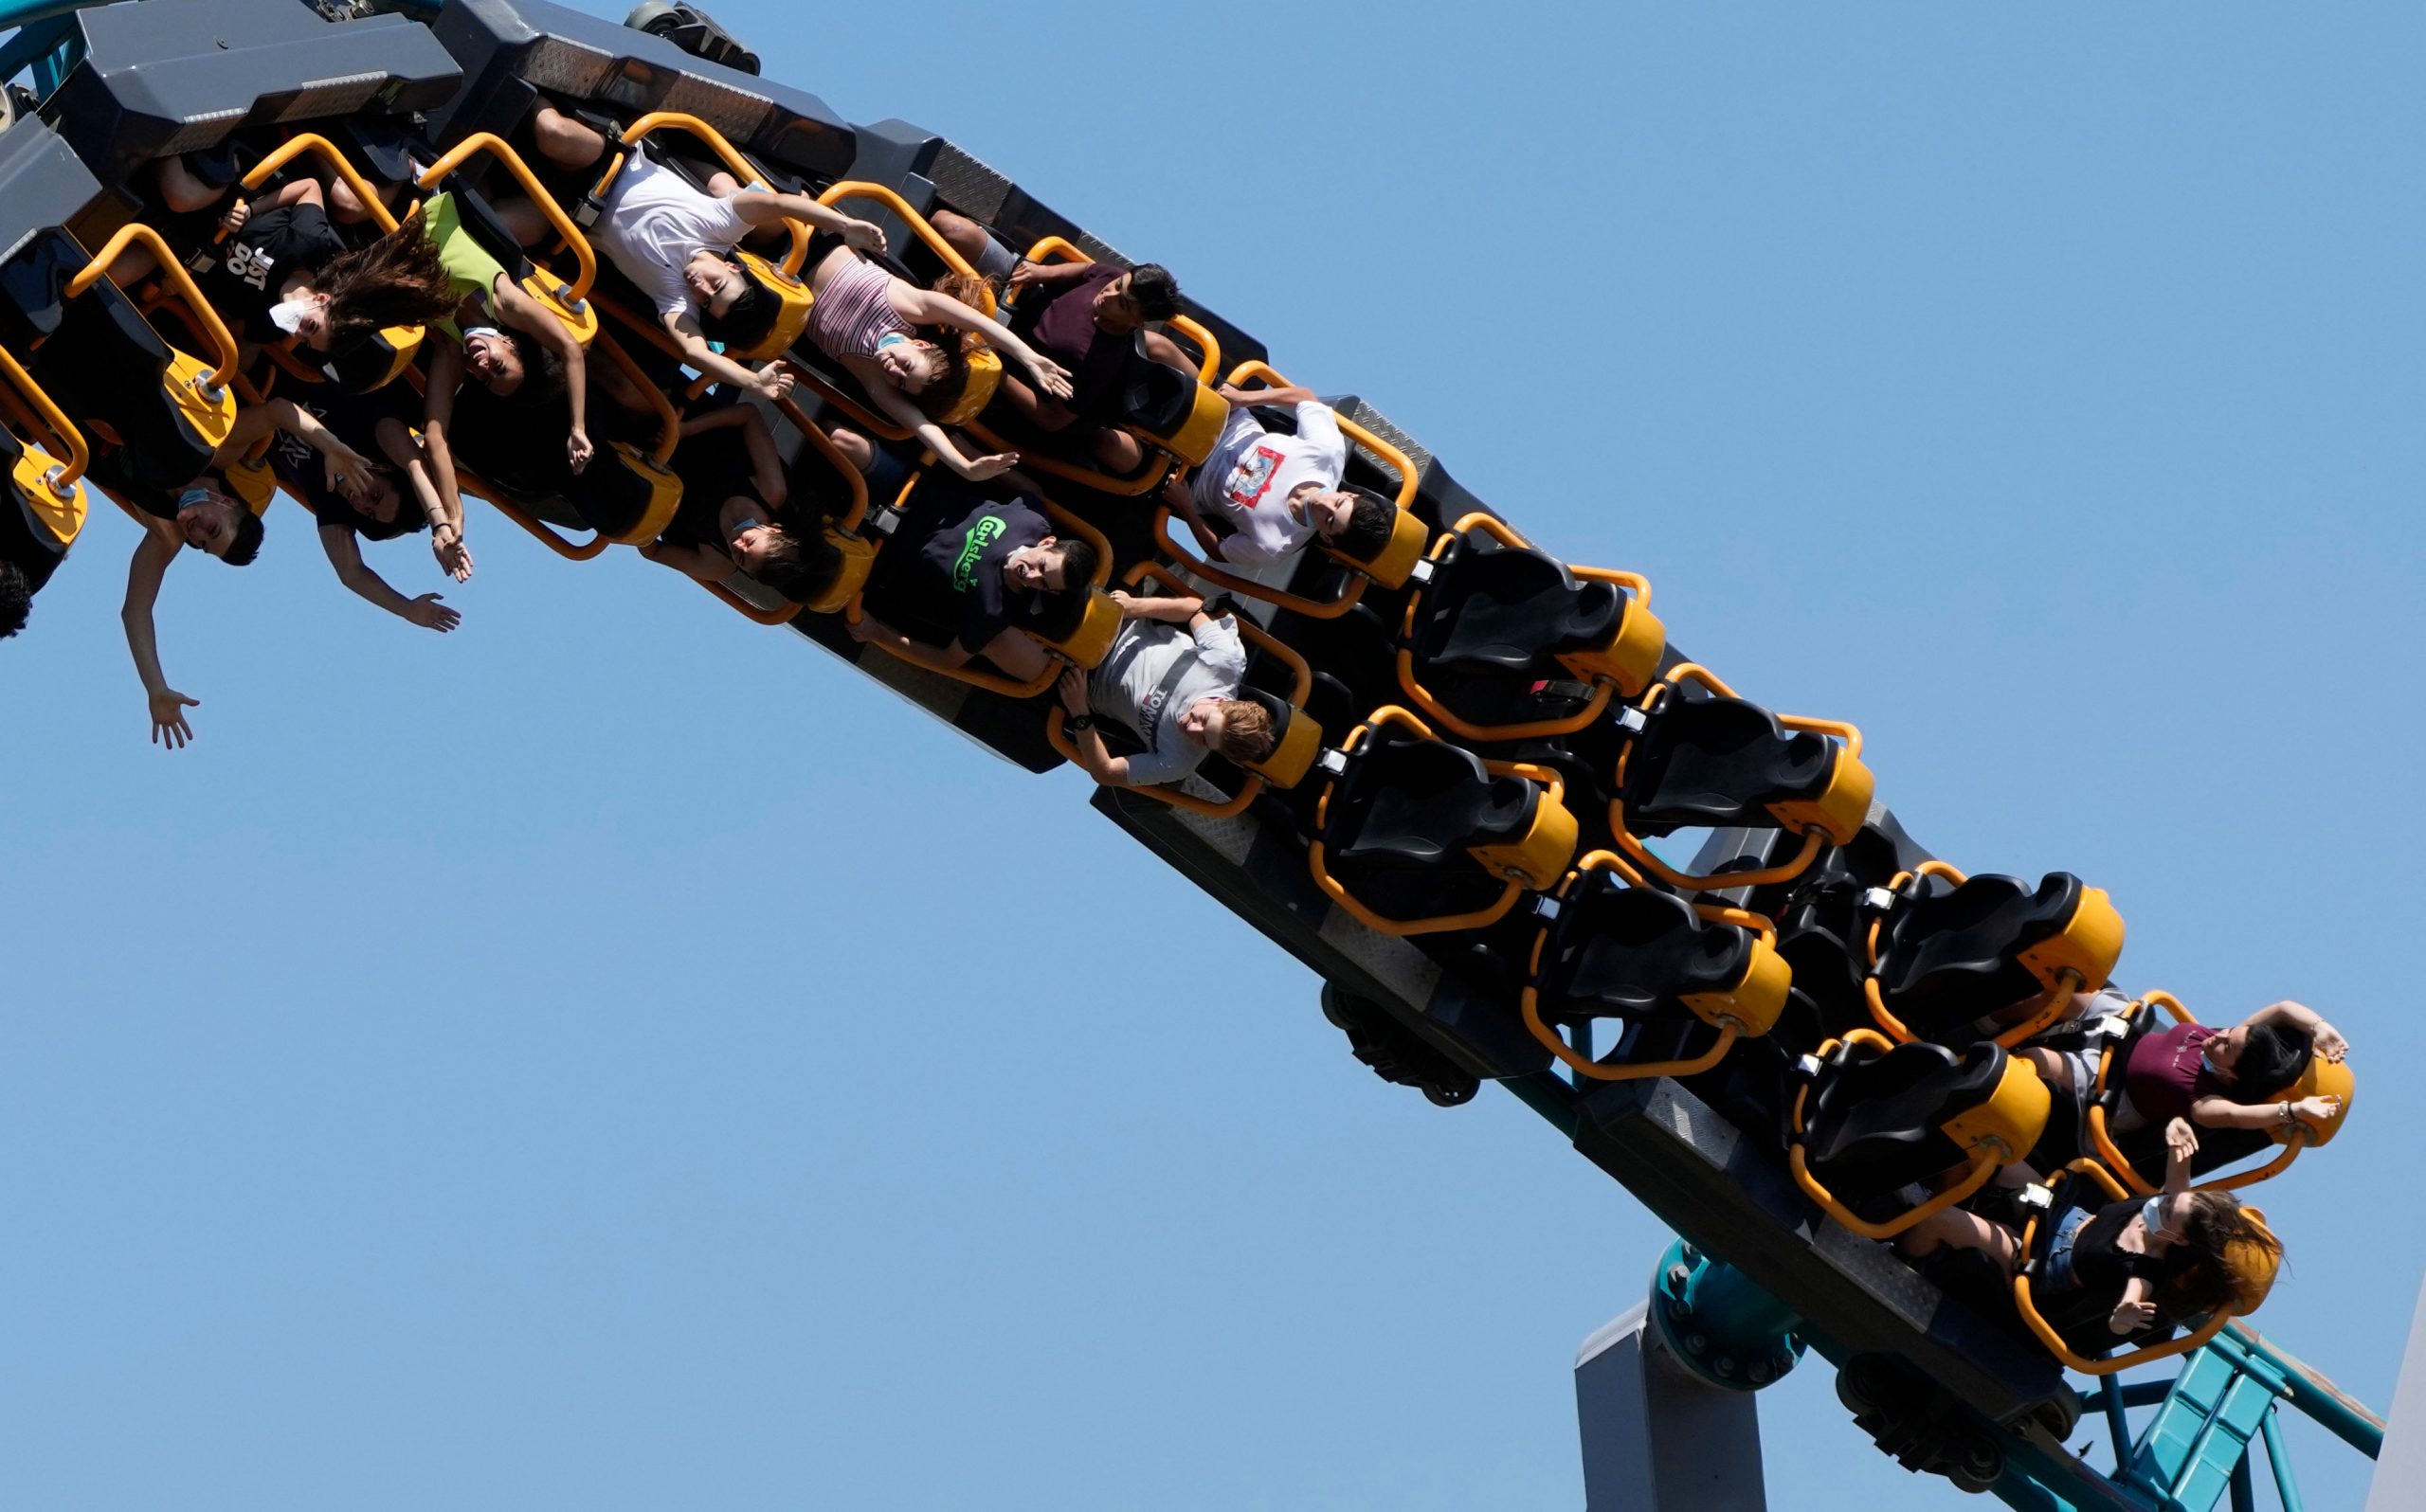 Head over heels: Rollercoaster riders left hanging upside down for 45 mins